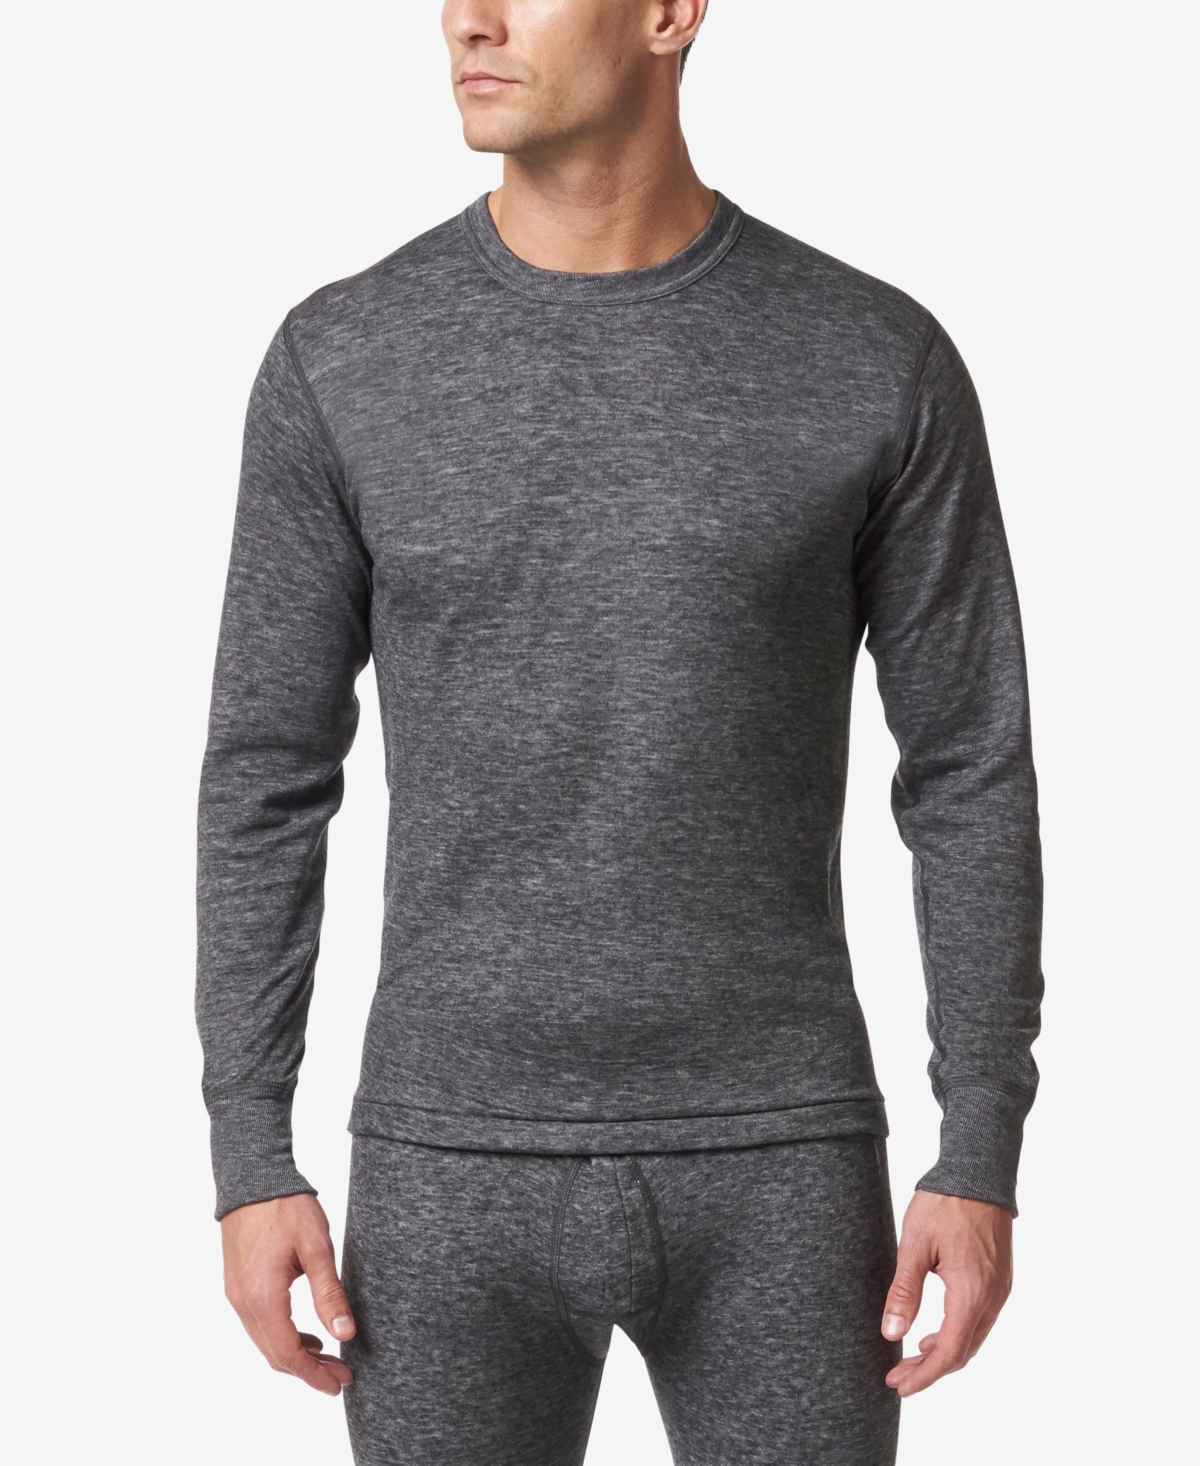 Men's 2 Layer Merino Wool Blend Long Sleeve Undershirt - Charcoal Mix